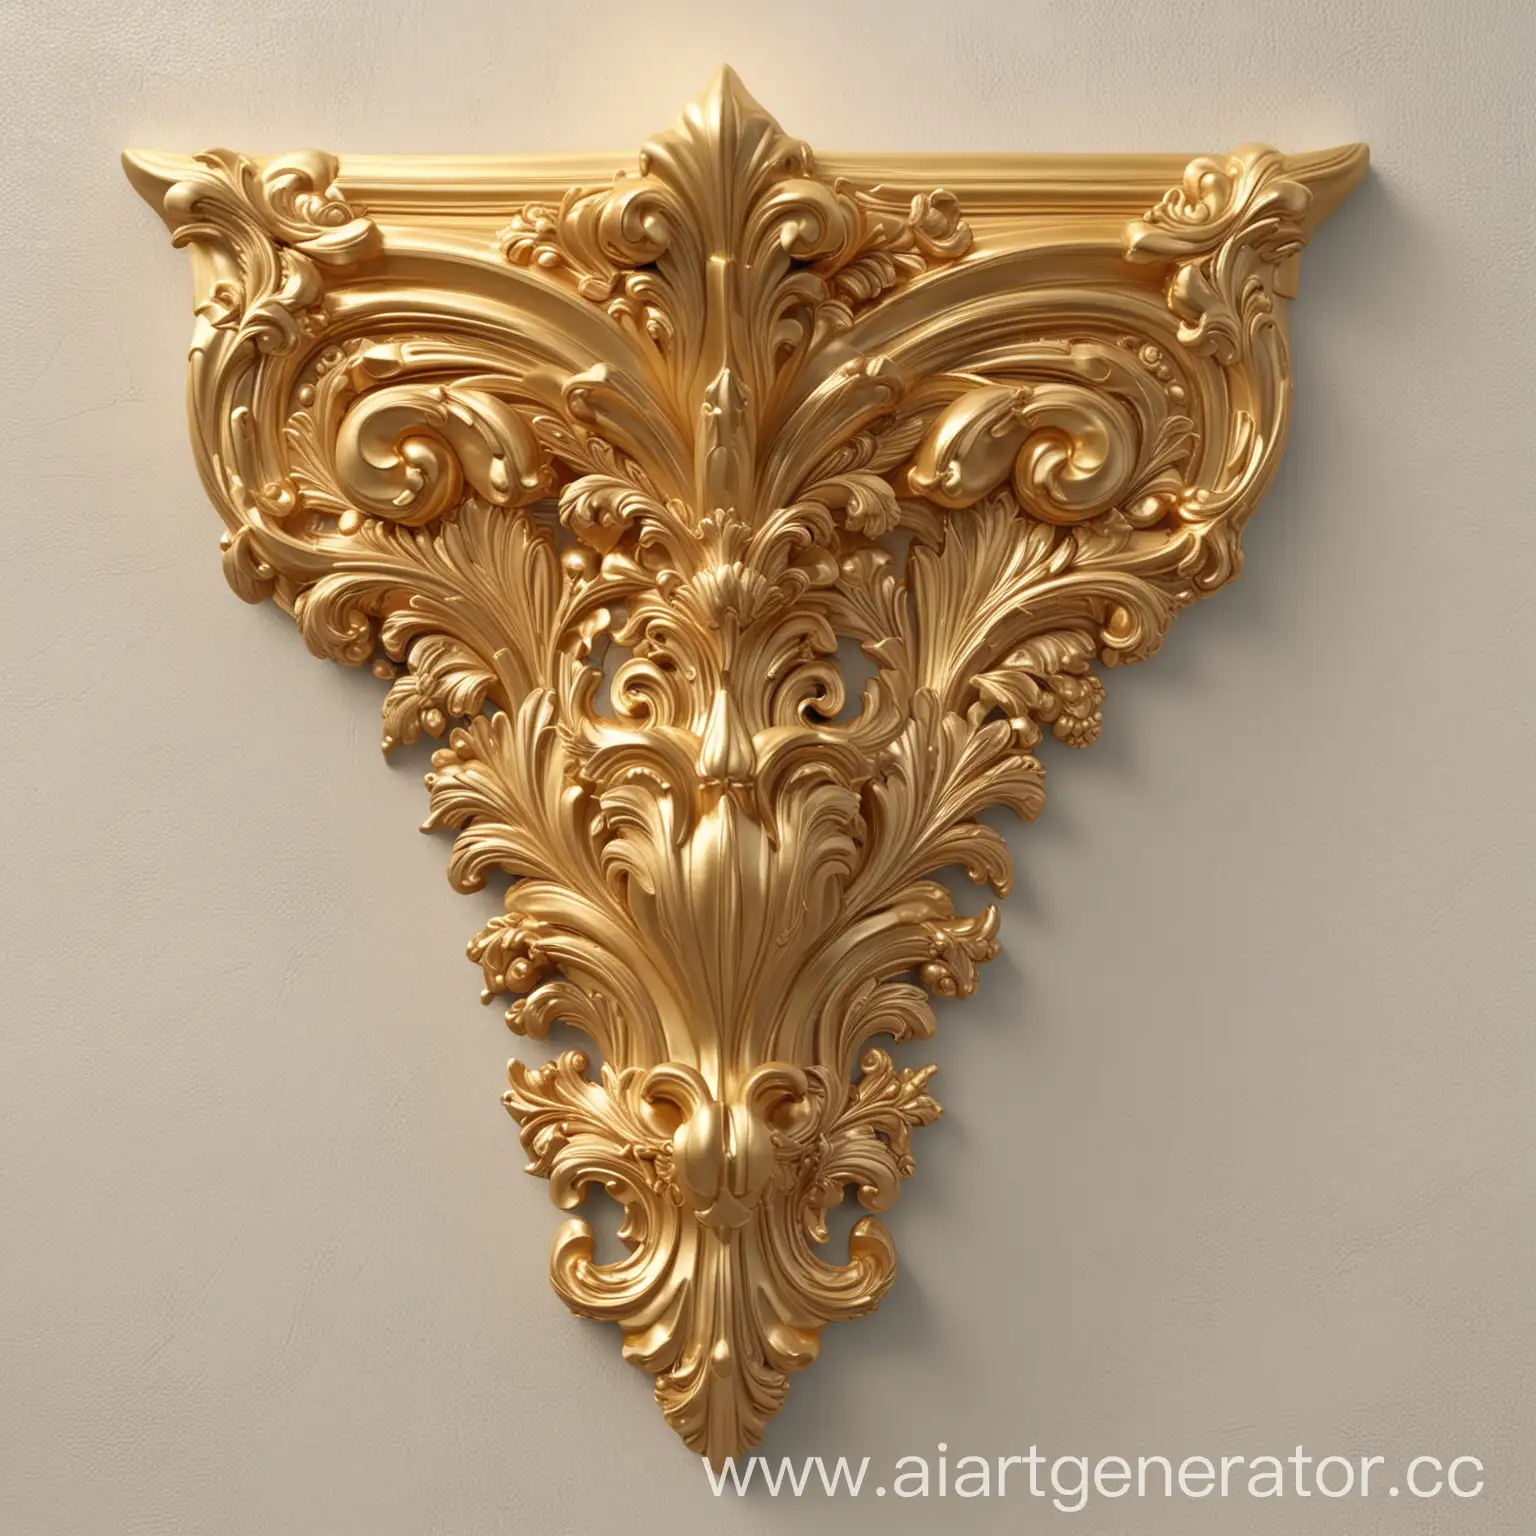 Gold 3D Decorative corner

